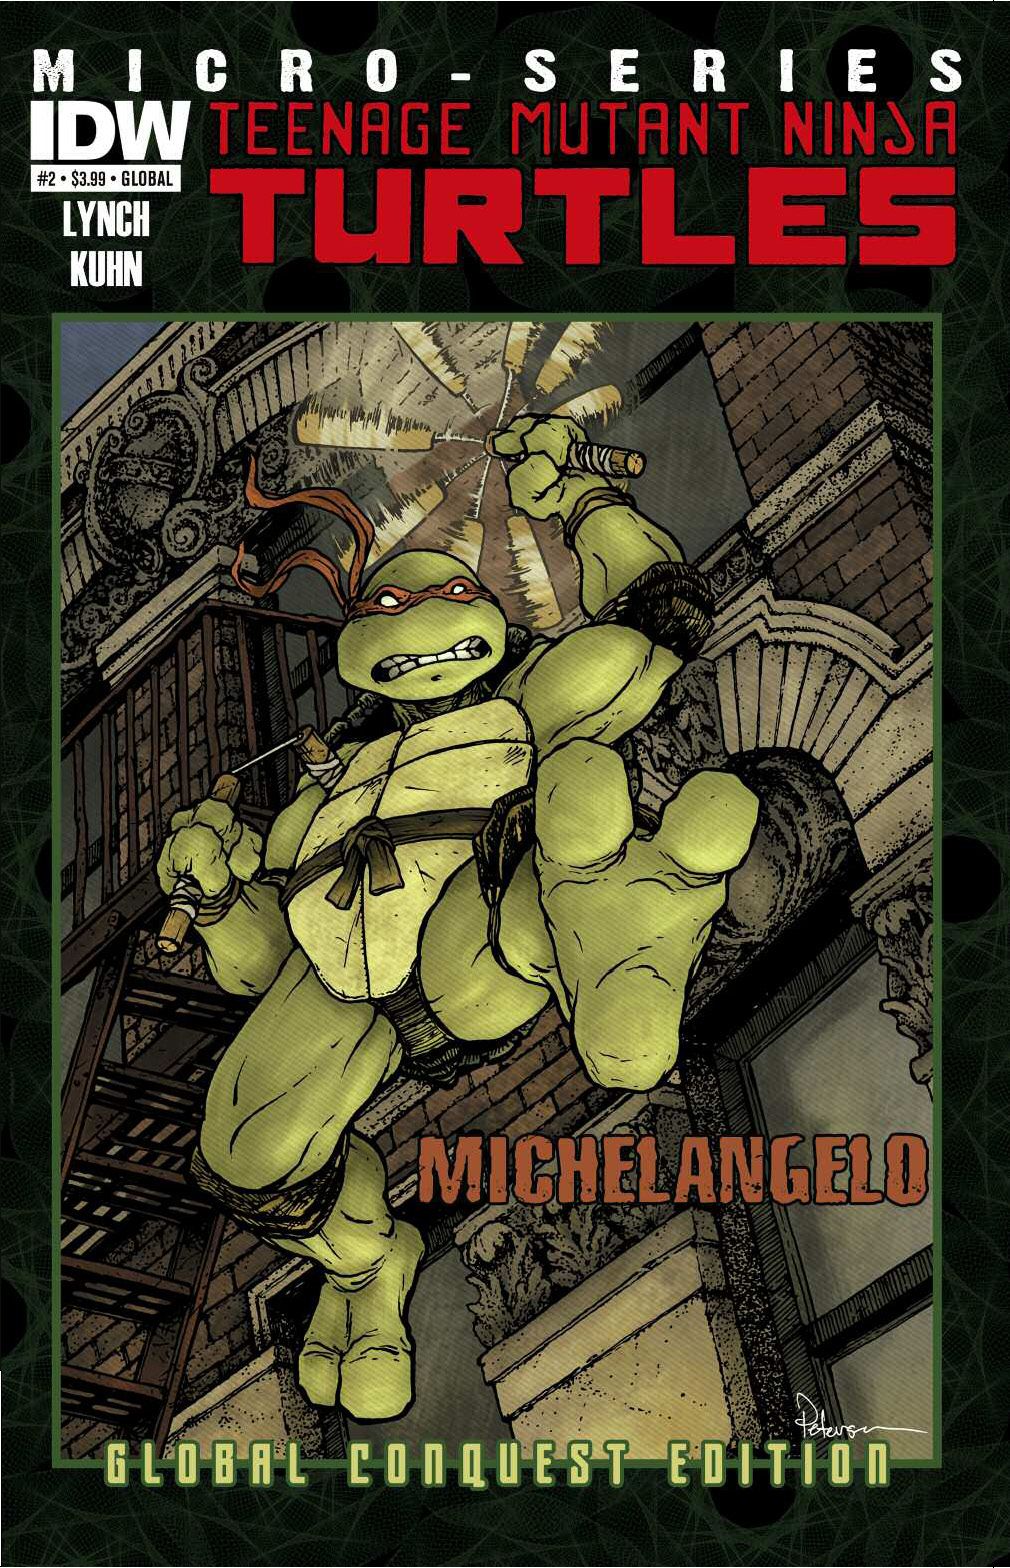 IDW Teenage Mutant Ninja Turtles (TMNT) Michelangelo Cover ...